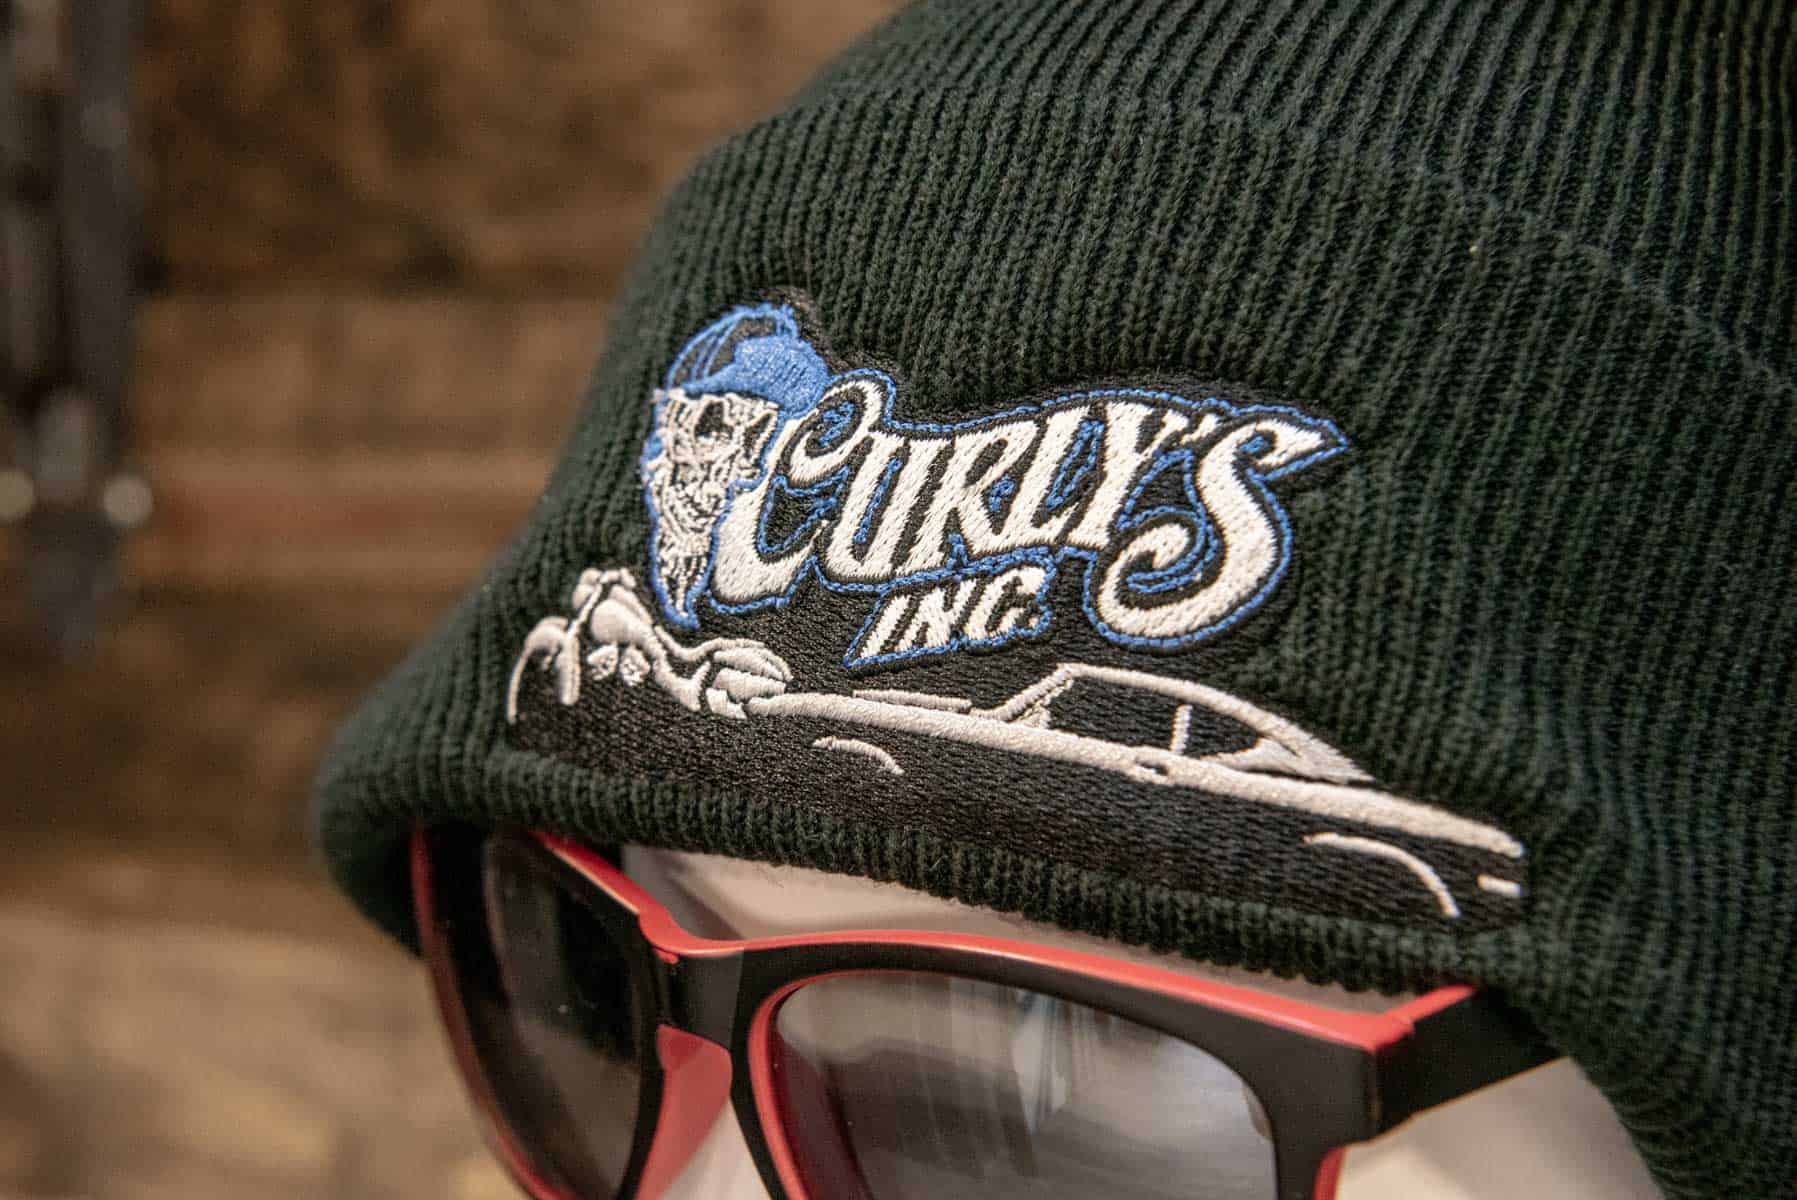 Curly's Inc | Web Development for Custom Bike Shop in Burns Harbor, IN 30